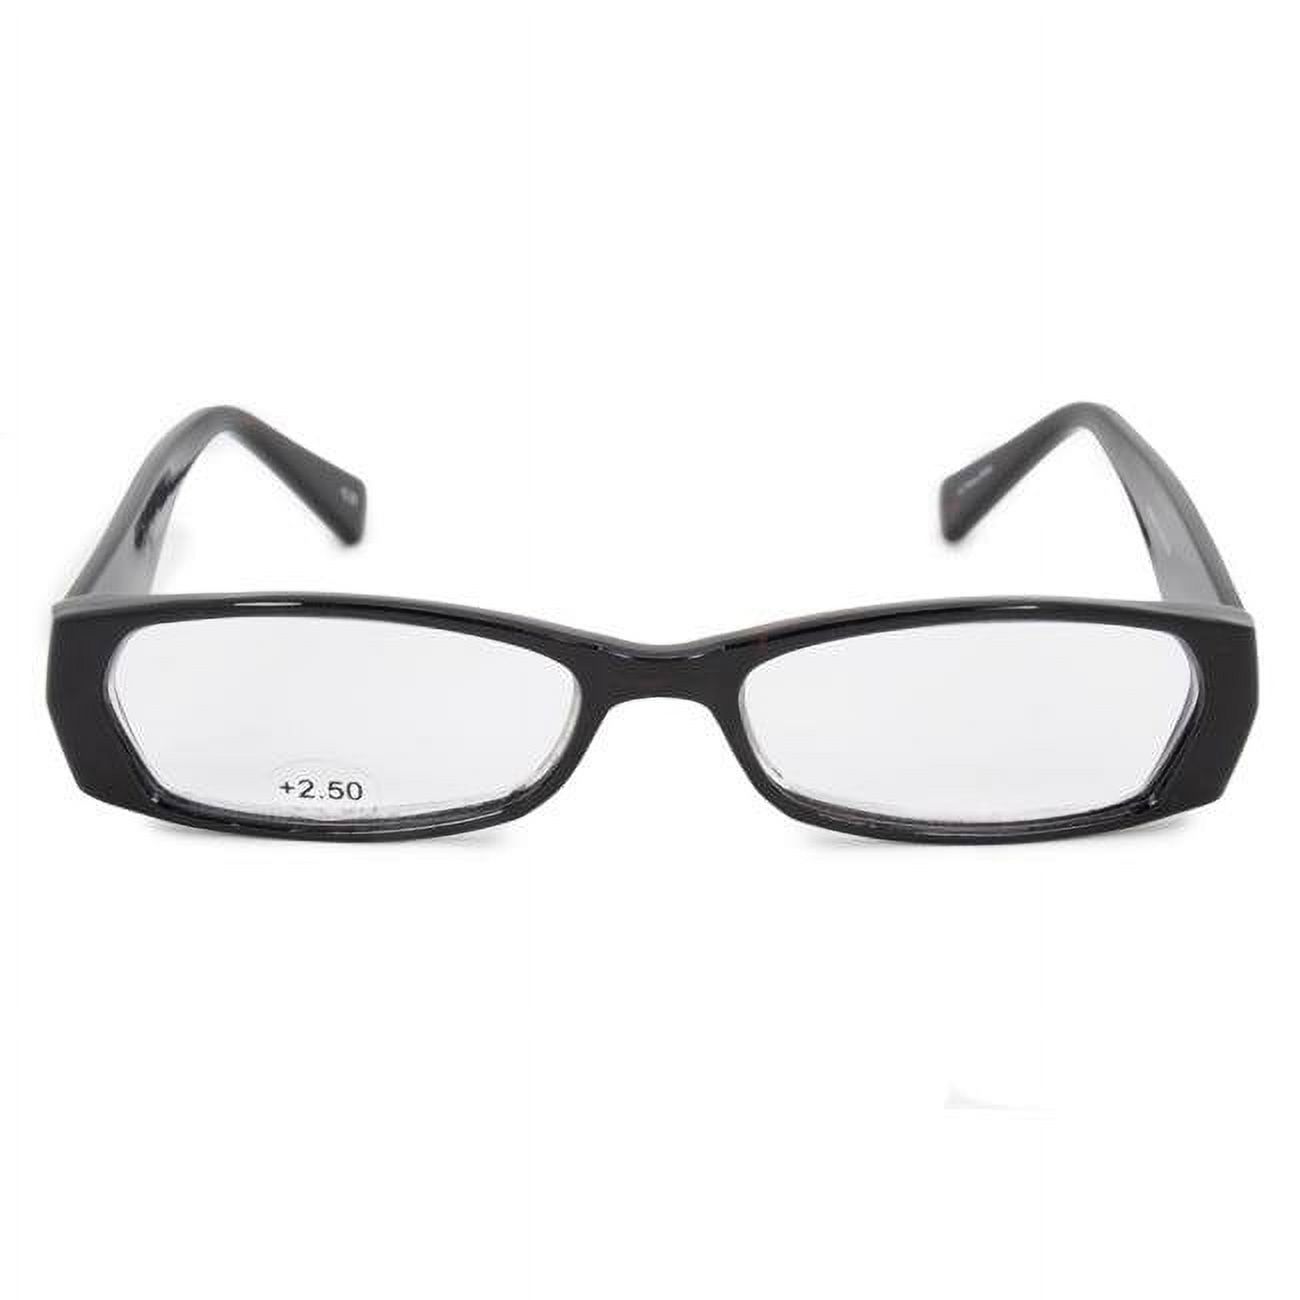 Harley Davidson  52-14-145 mm 2.50 Lenses Rectangular Reading Eyeglasses, Dark Brown - image 1 of 9